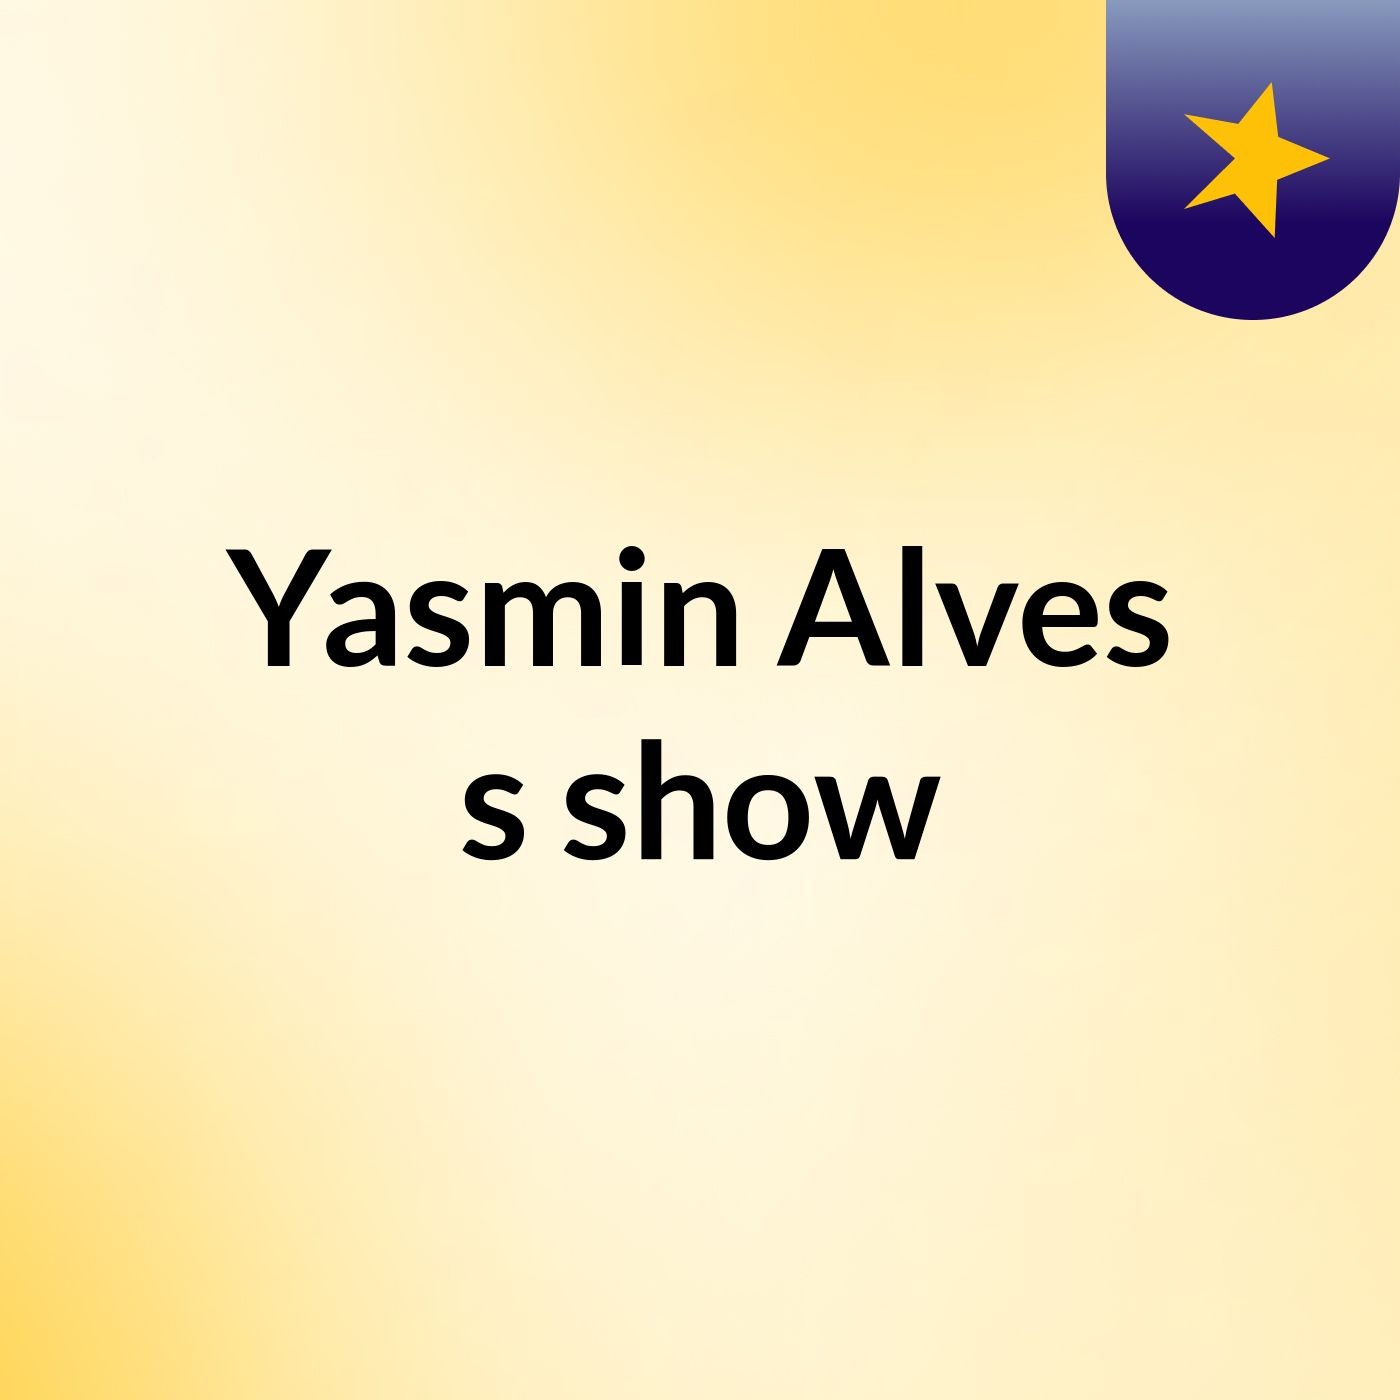 Yasmin Alves's show